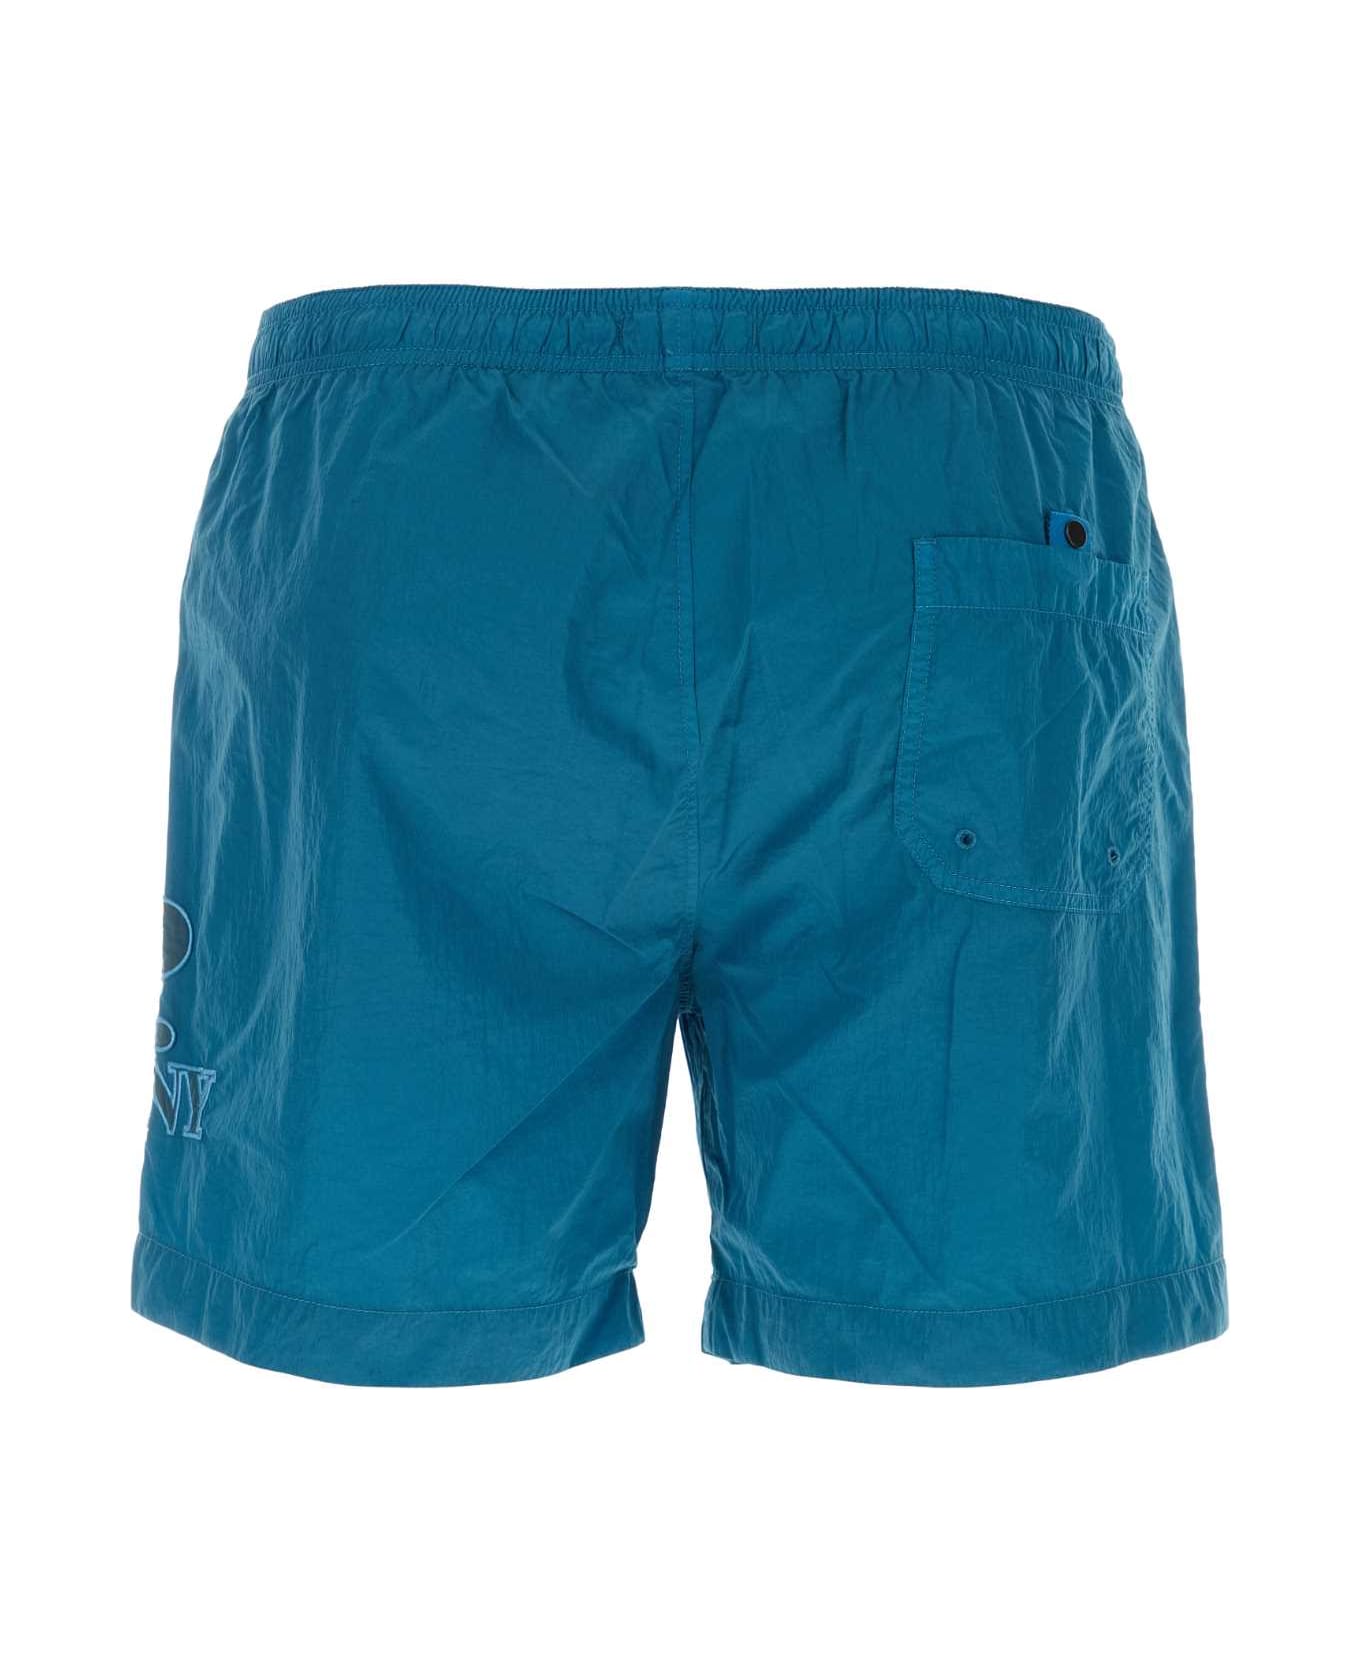 C.P. Company Air Force Blue Nylon Swimming Shorts - INKBLUE 水着